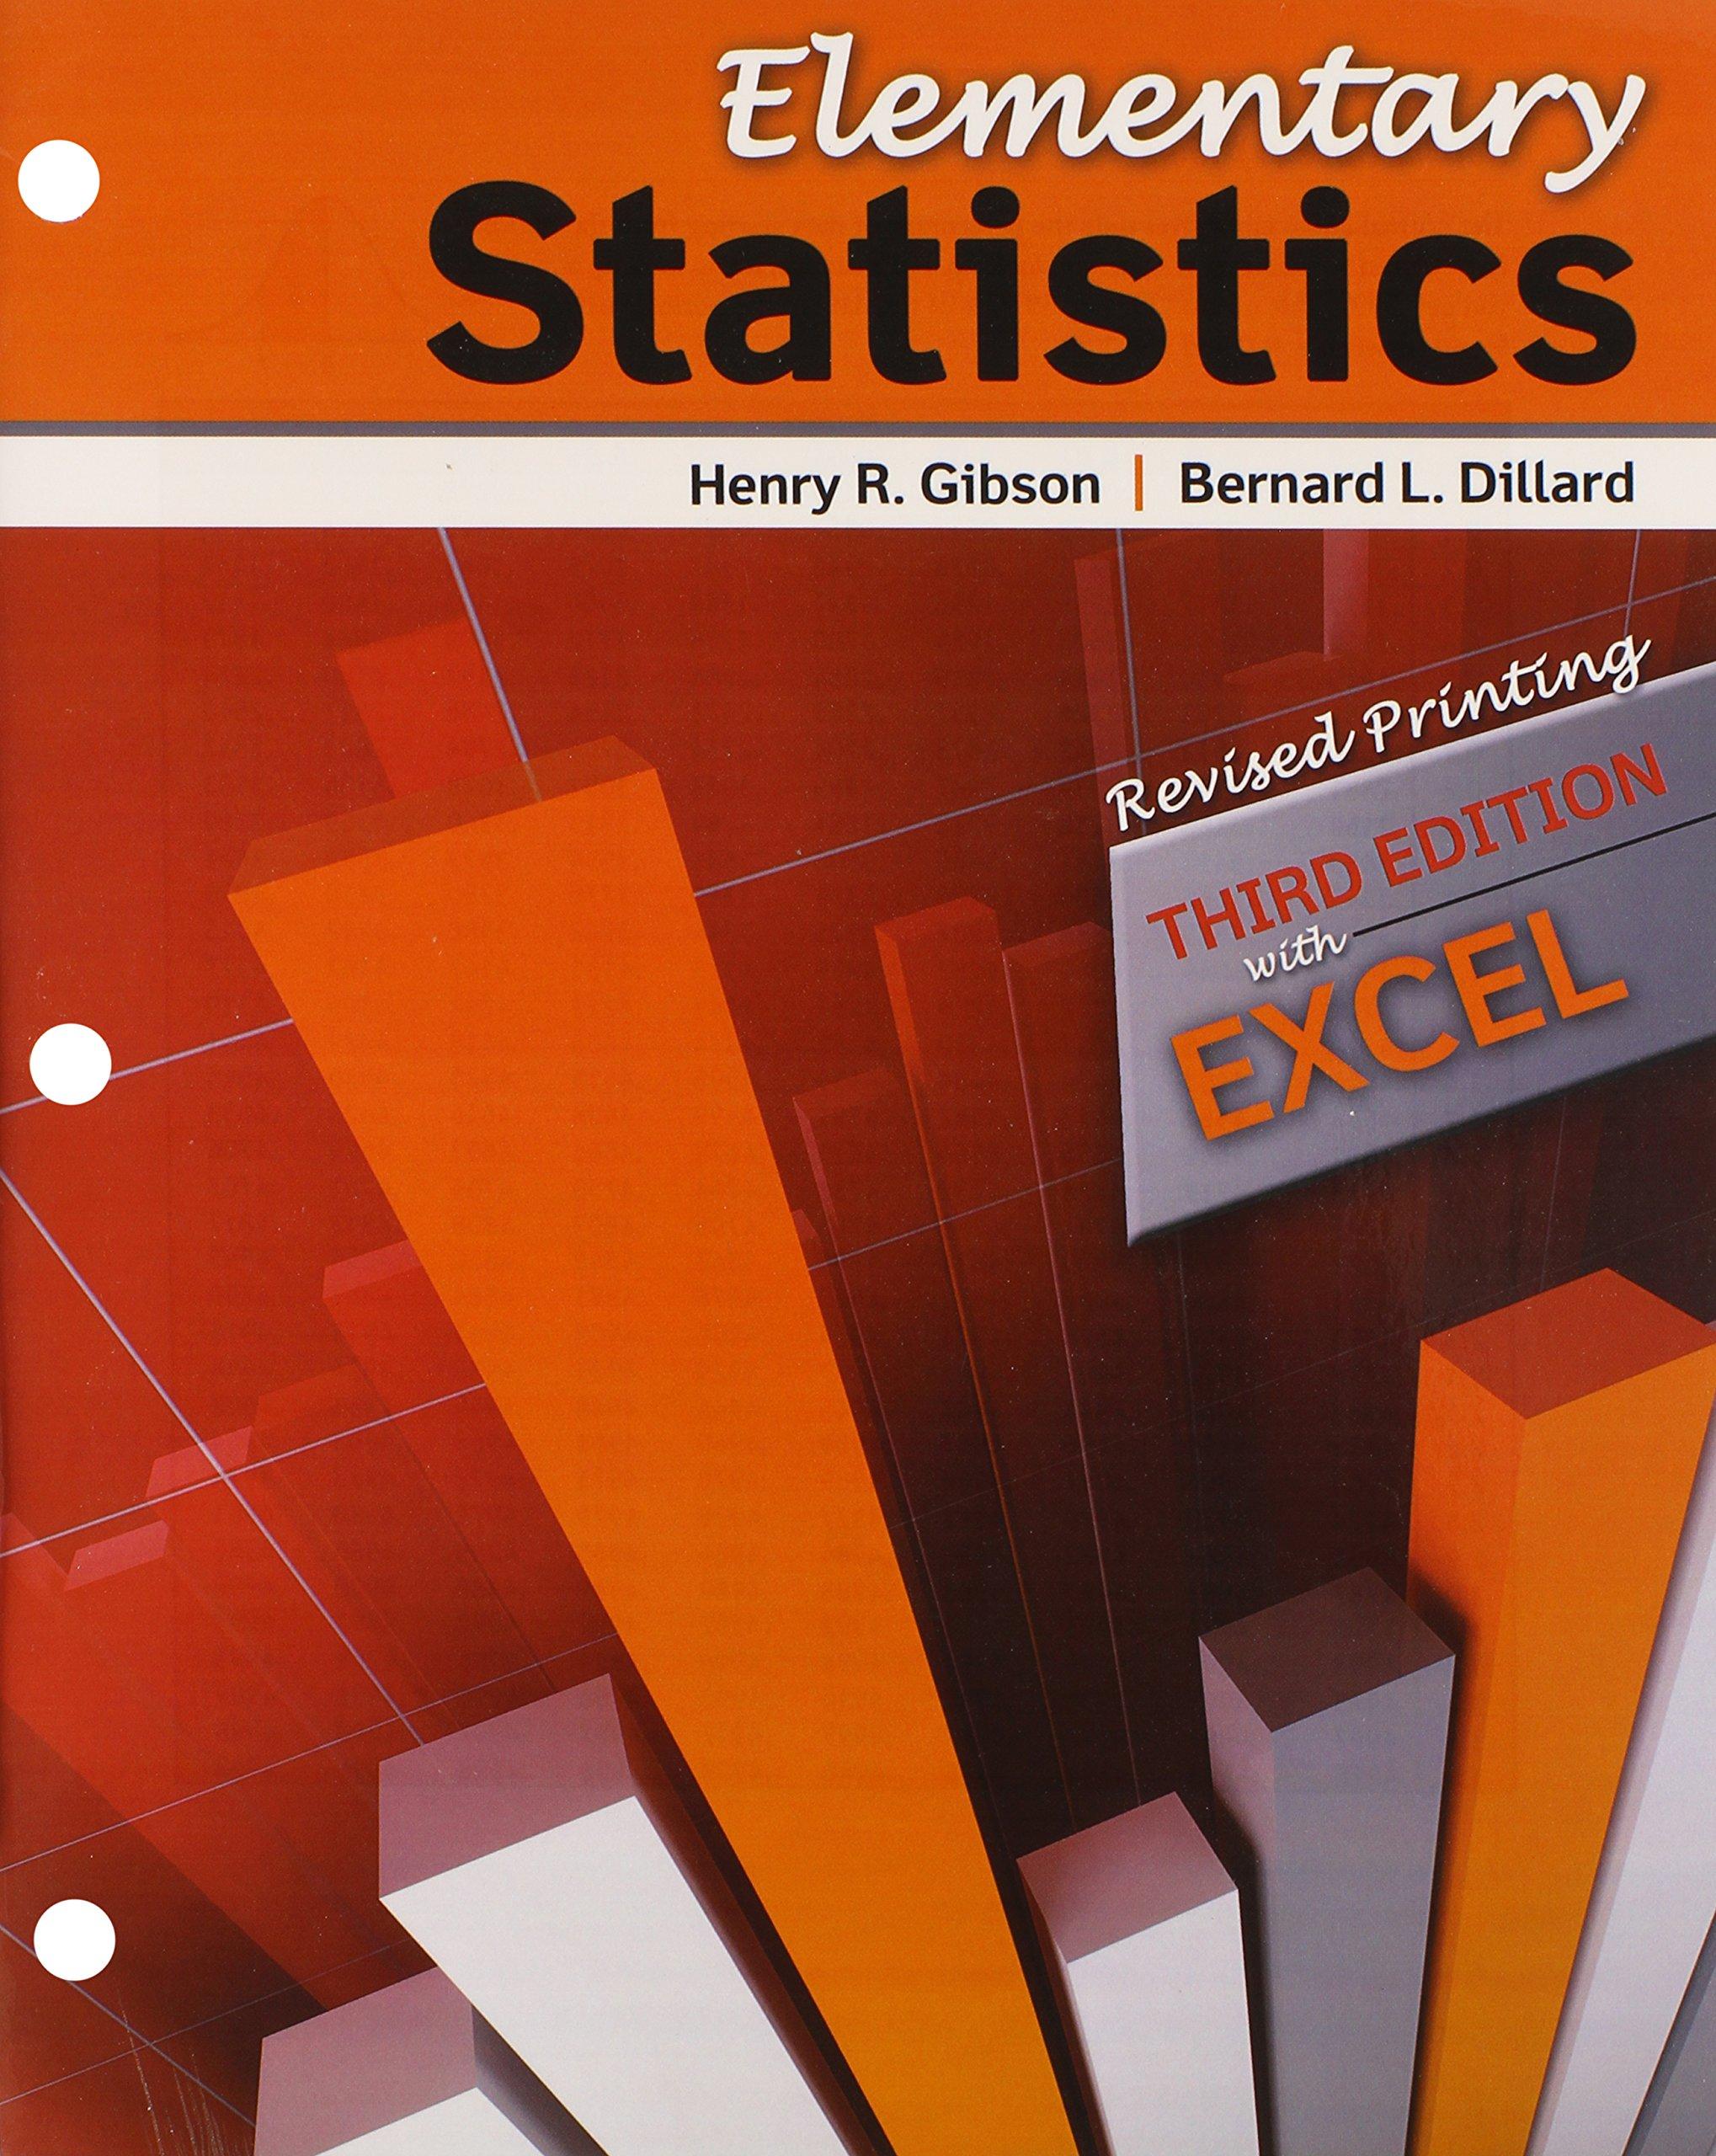 elementary statistics 3rd edition henry r gibson, bernard l dillard 146521027x, 9781465210272